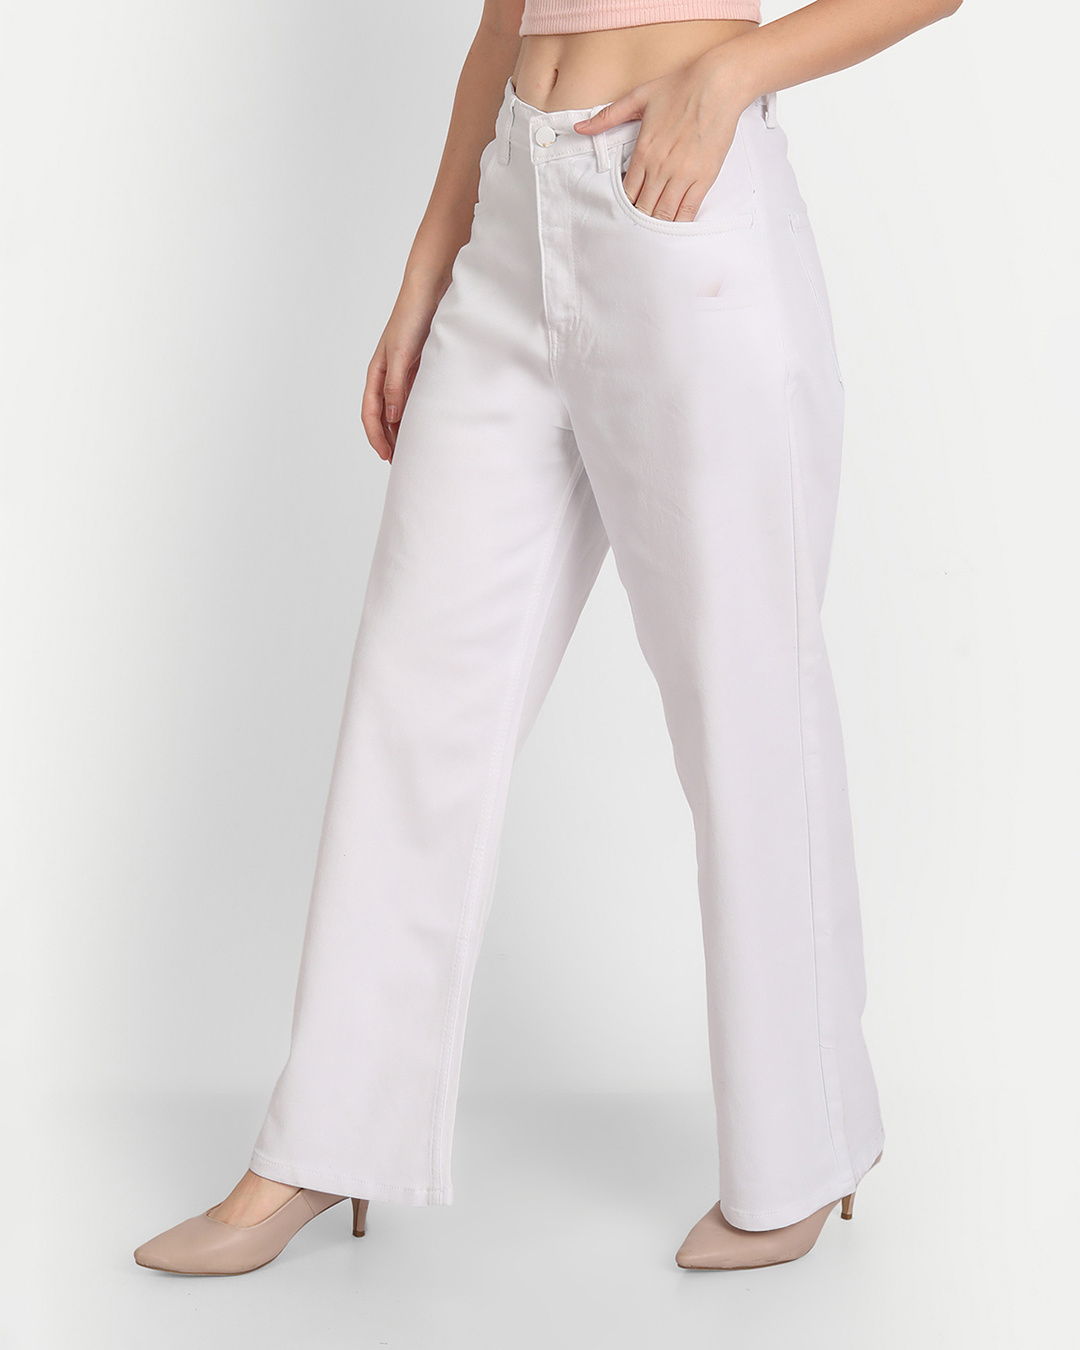 Shop Women's White Loose Comfort Fit Jeans-Back